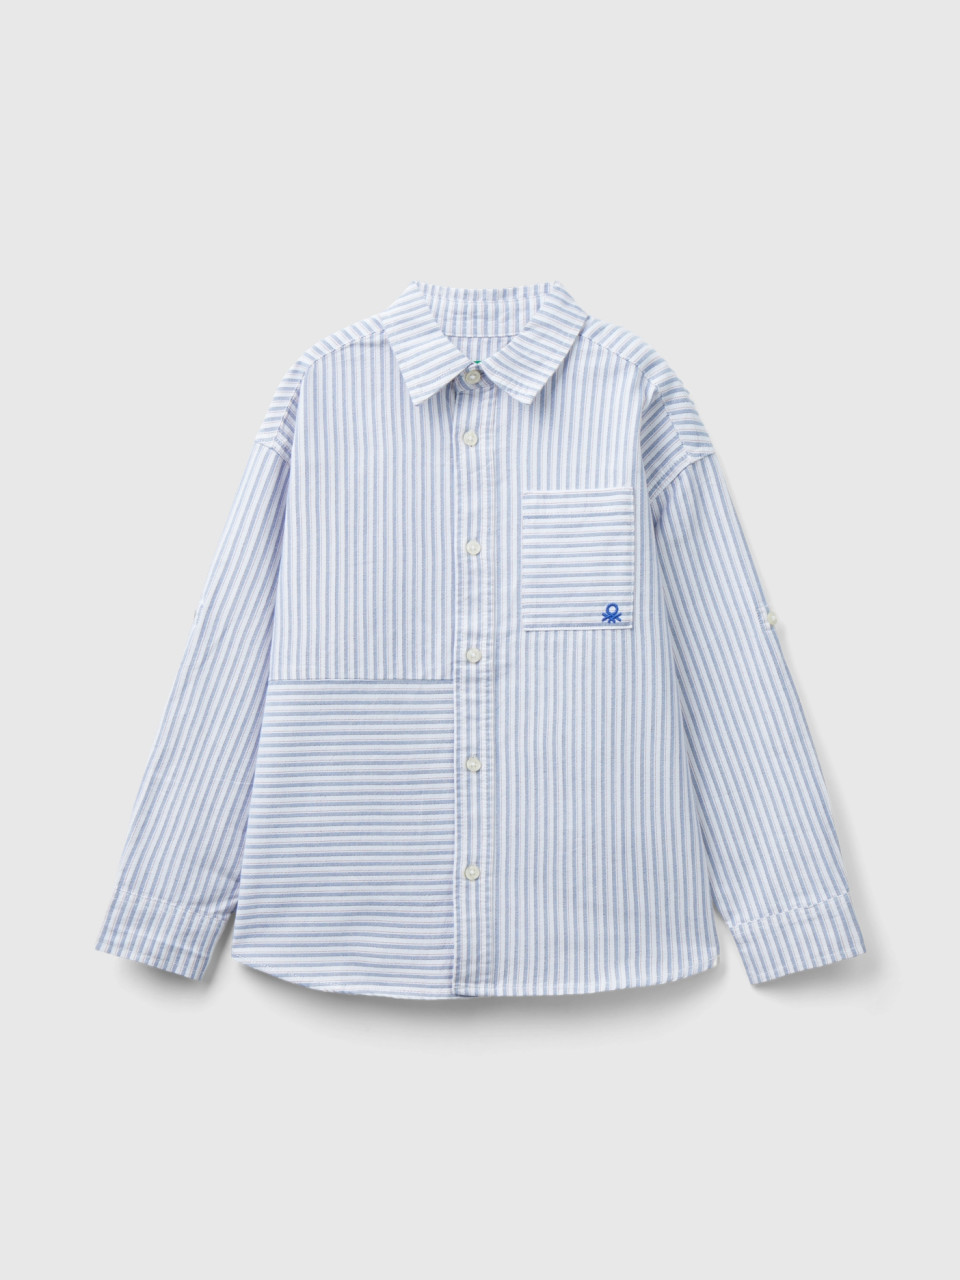 Benetton, Striped Long Sleeve Shirt, Multi-color, Kids